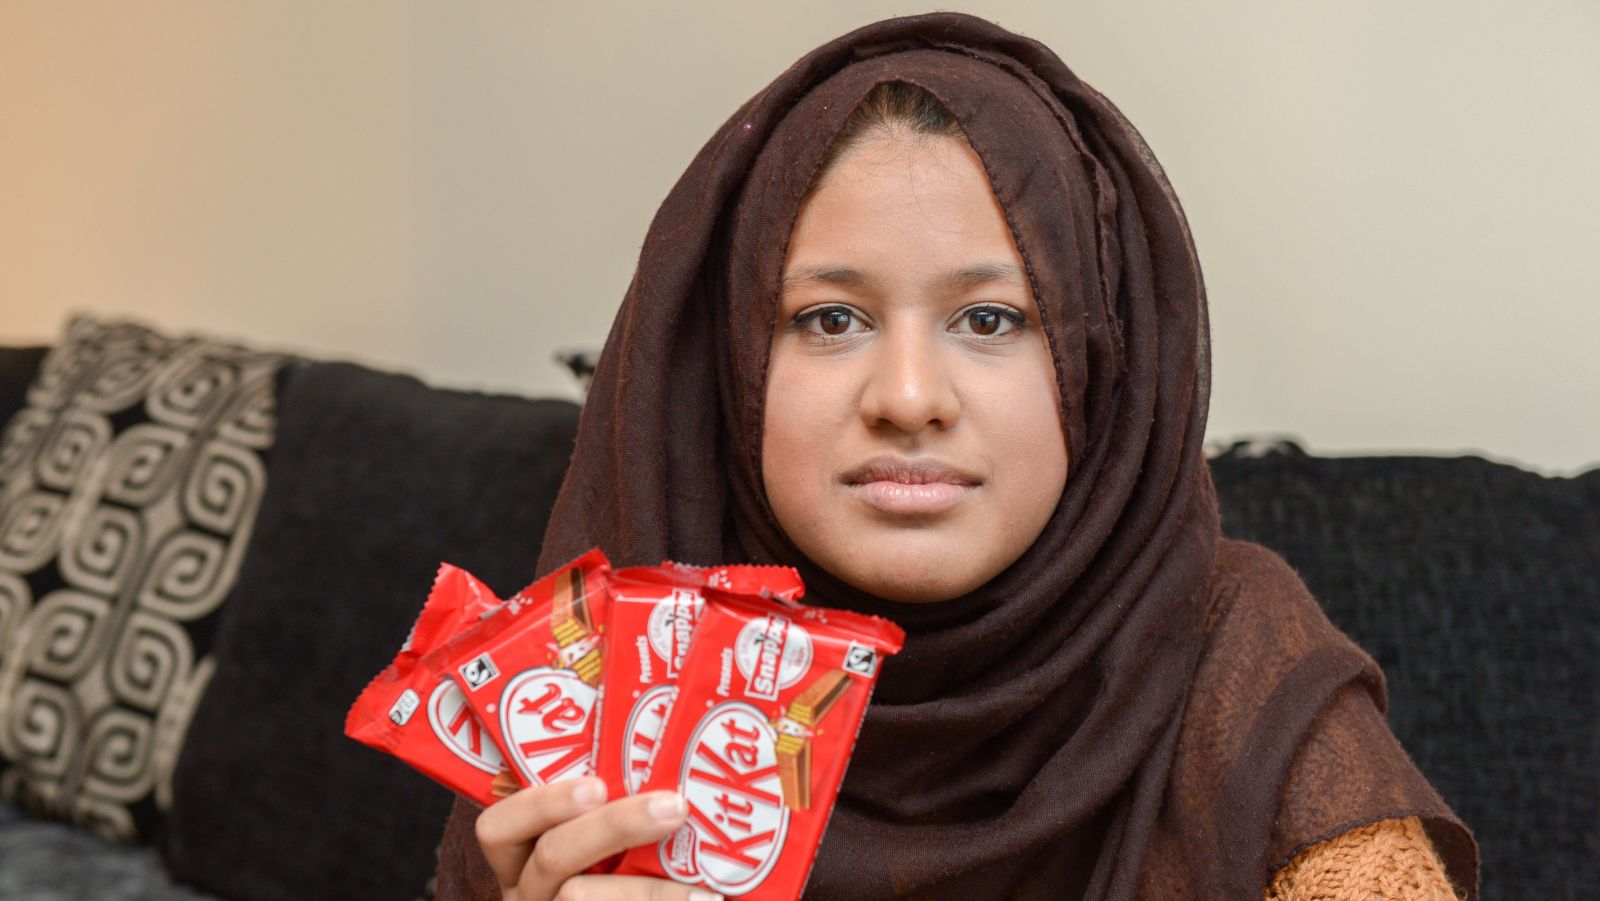 Woman demands lifetime KitKat supply over wafer glitch | ITV News